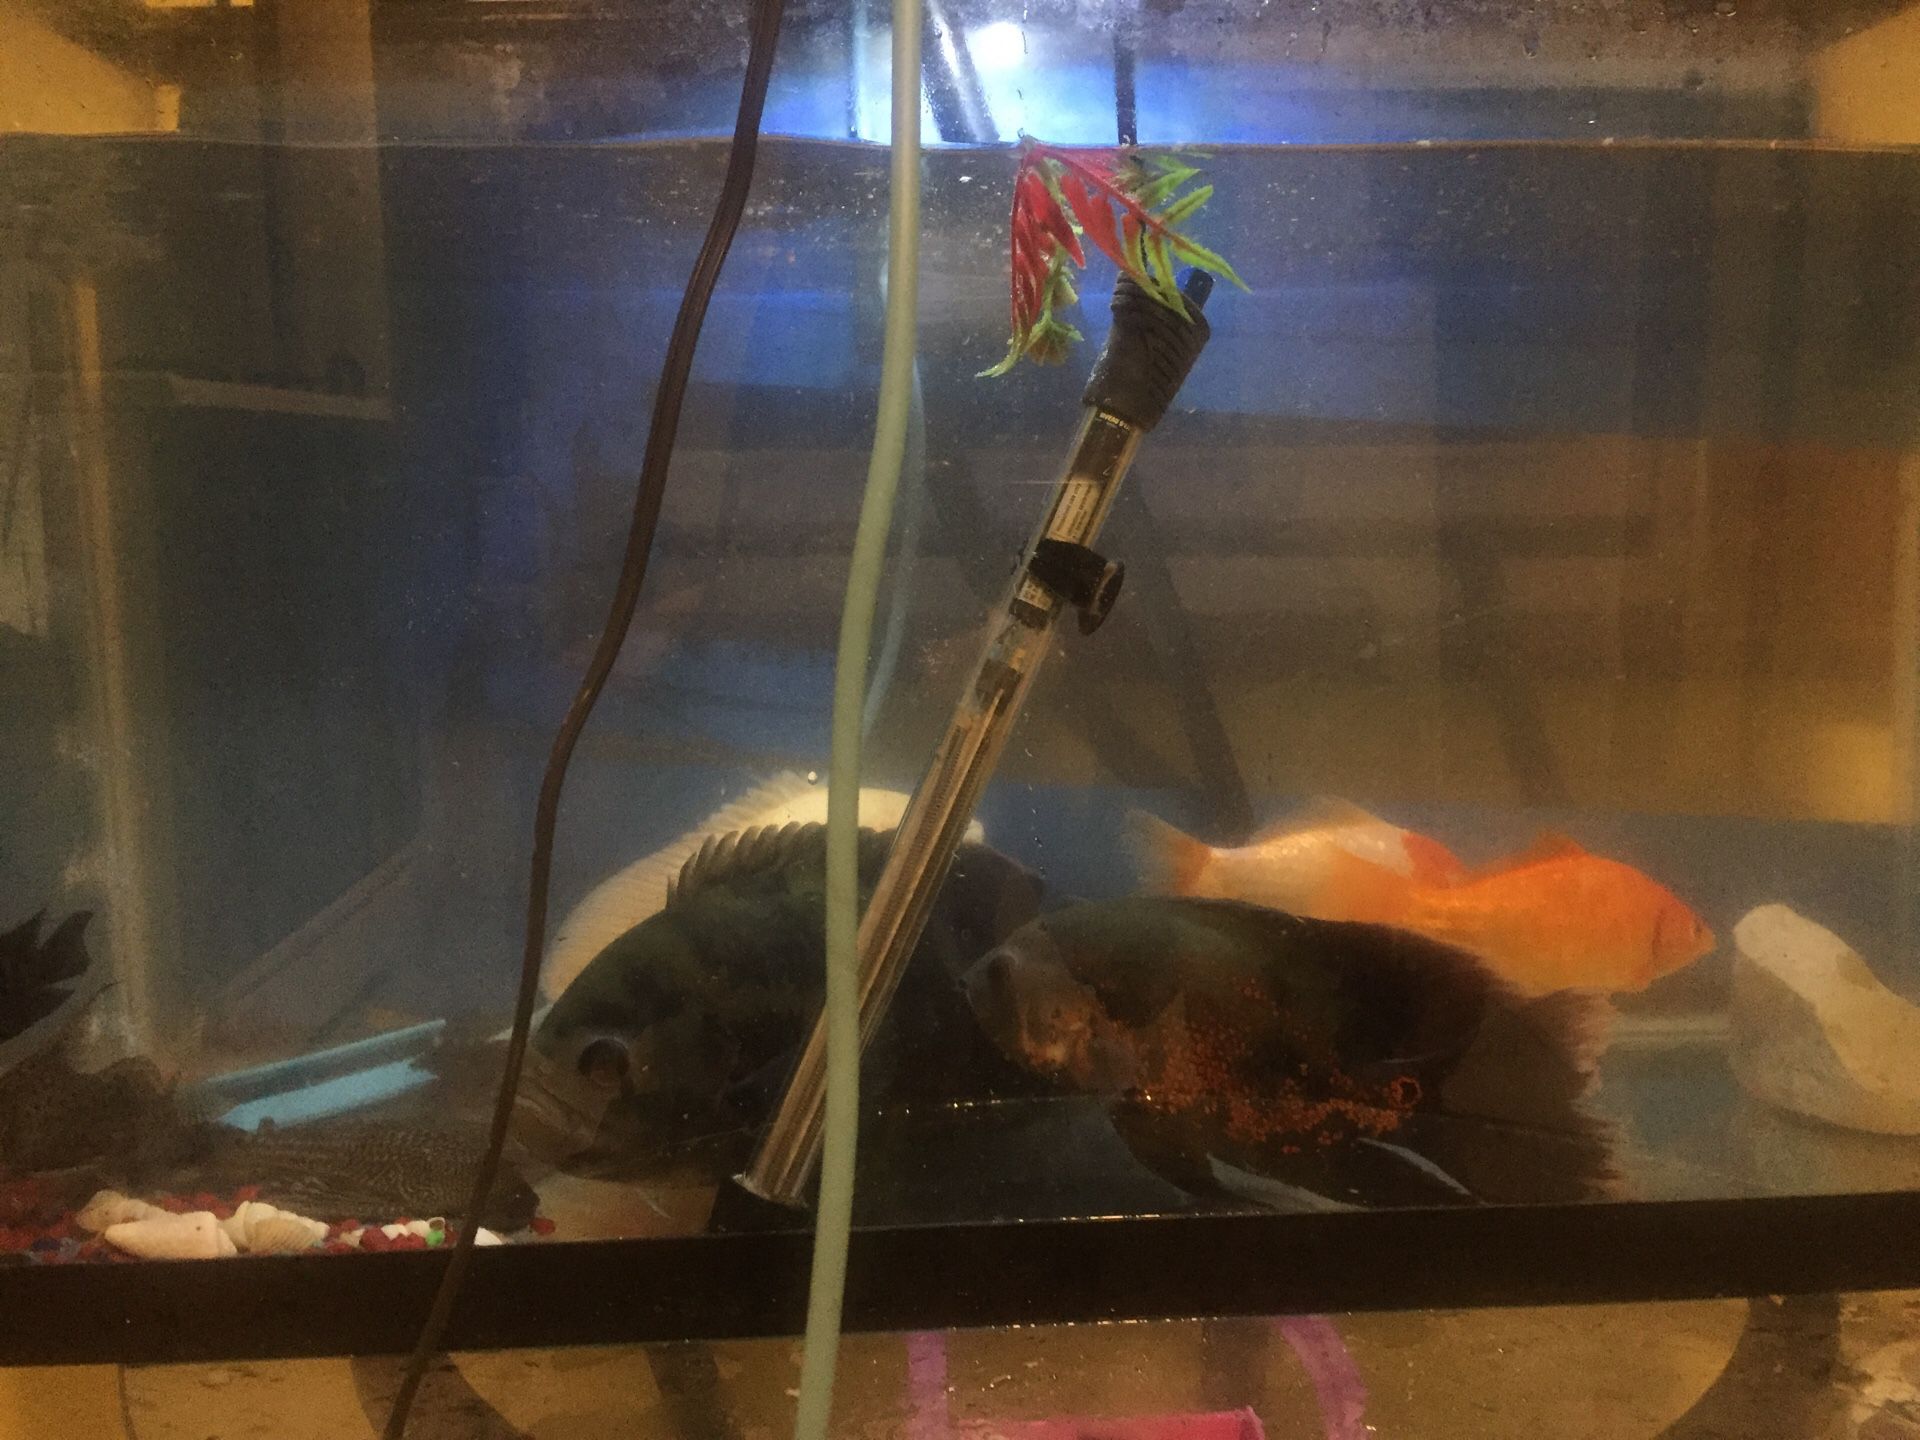 Fish tank & fishes